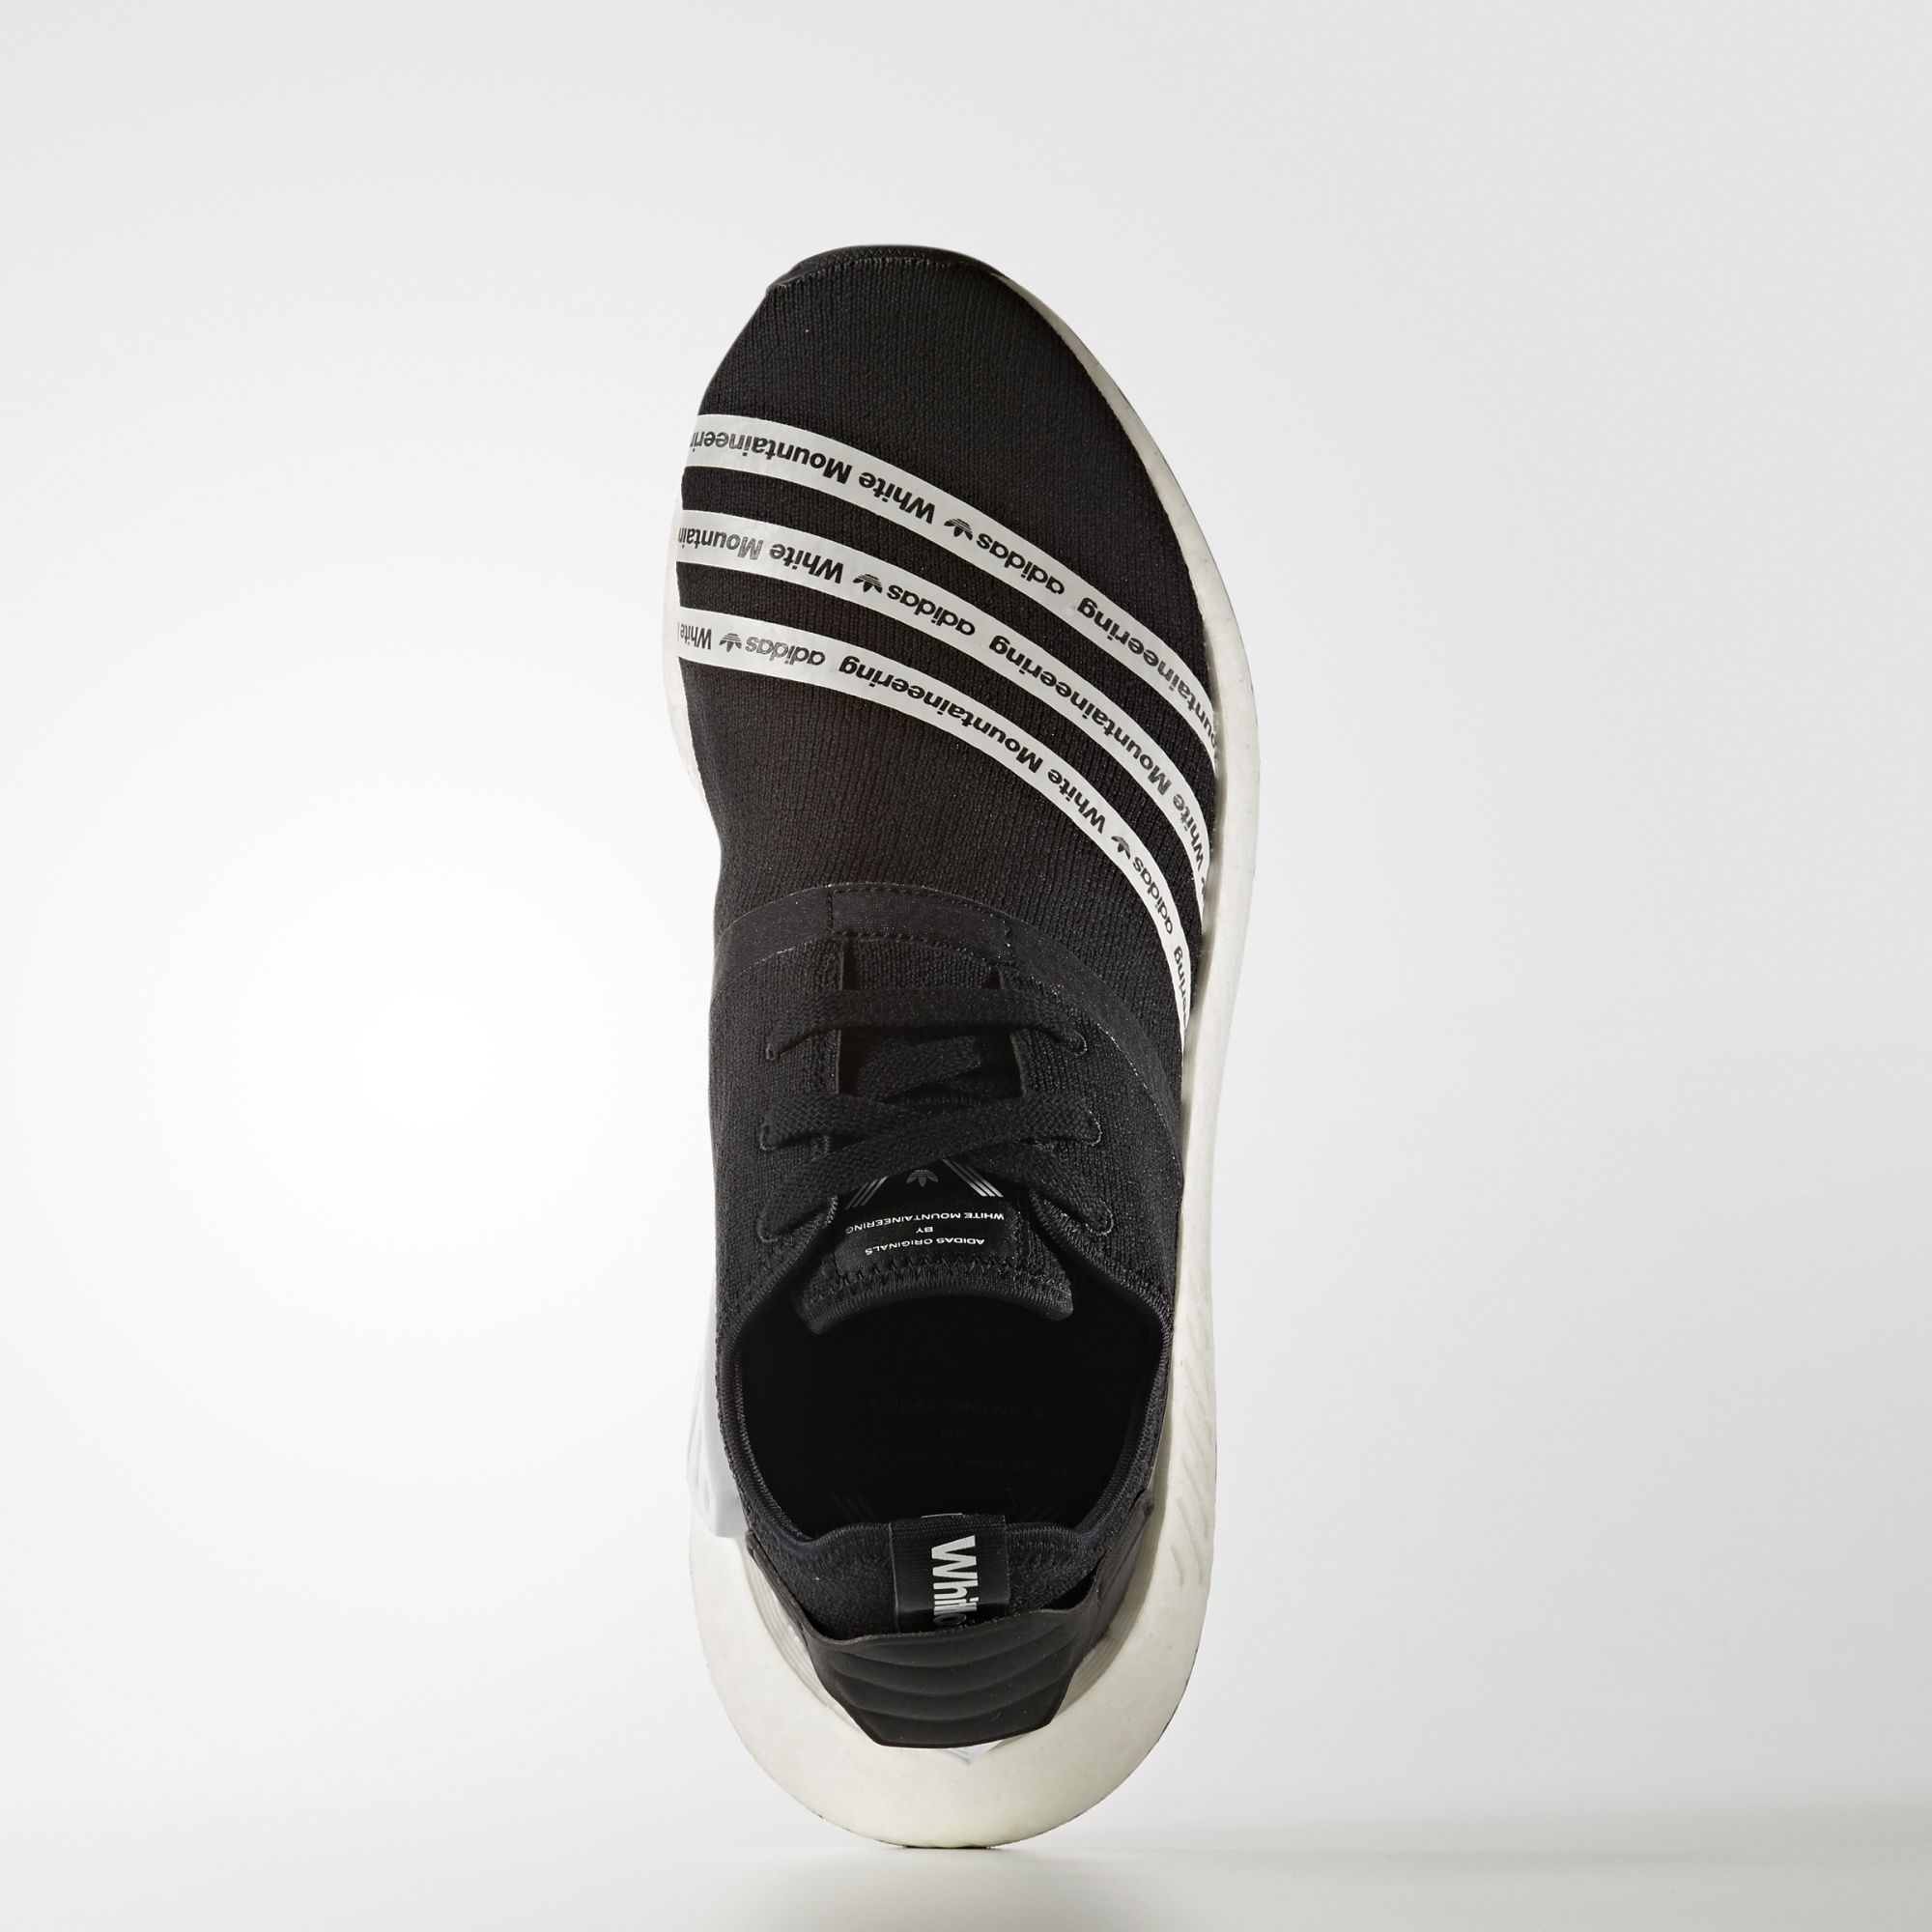 Adidas x White Mountaineering NMD_R2
Core Black / Footwear White